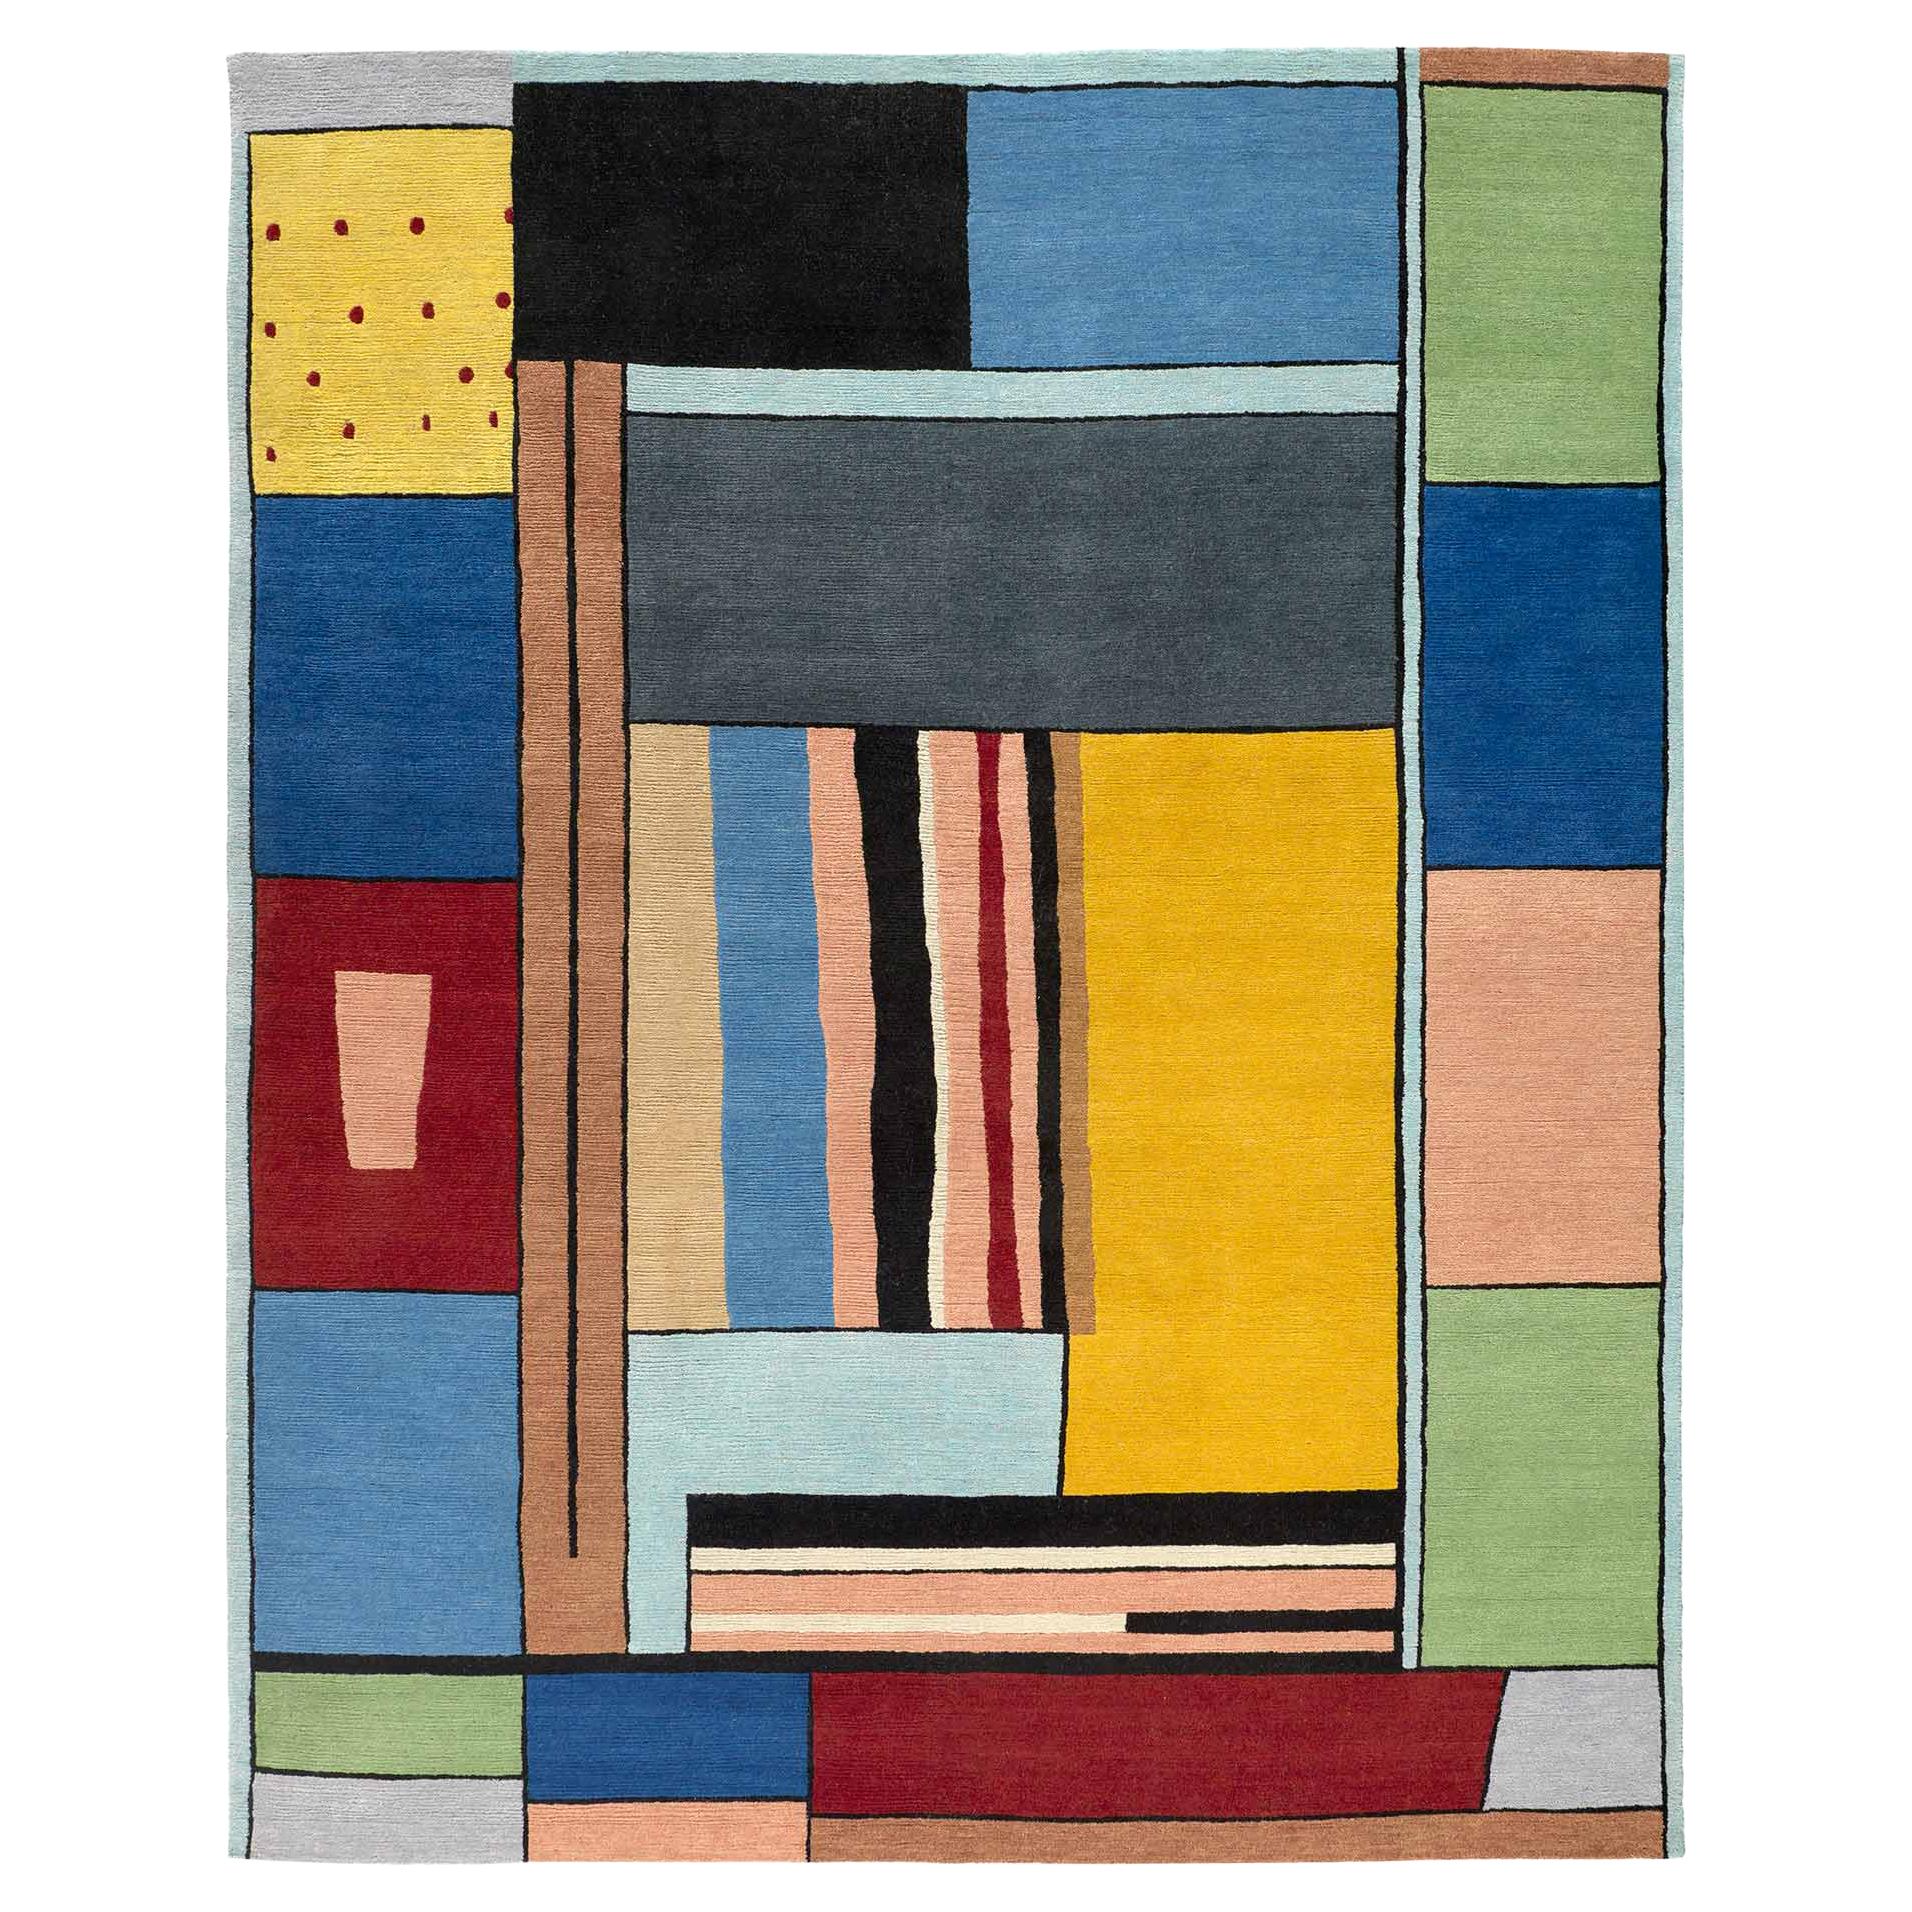 Cape COD Woollen Carpet by Roger Selden for Post Design Collection/Memphis For Sale